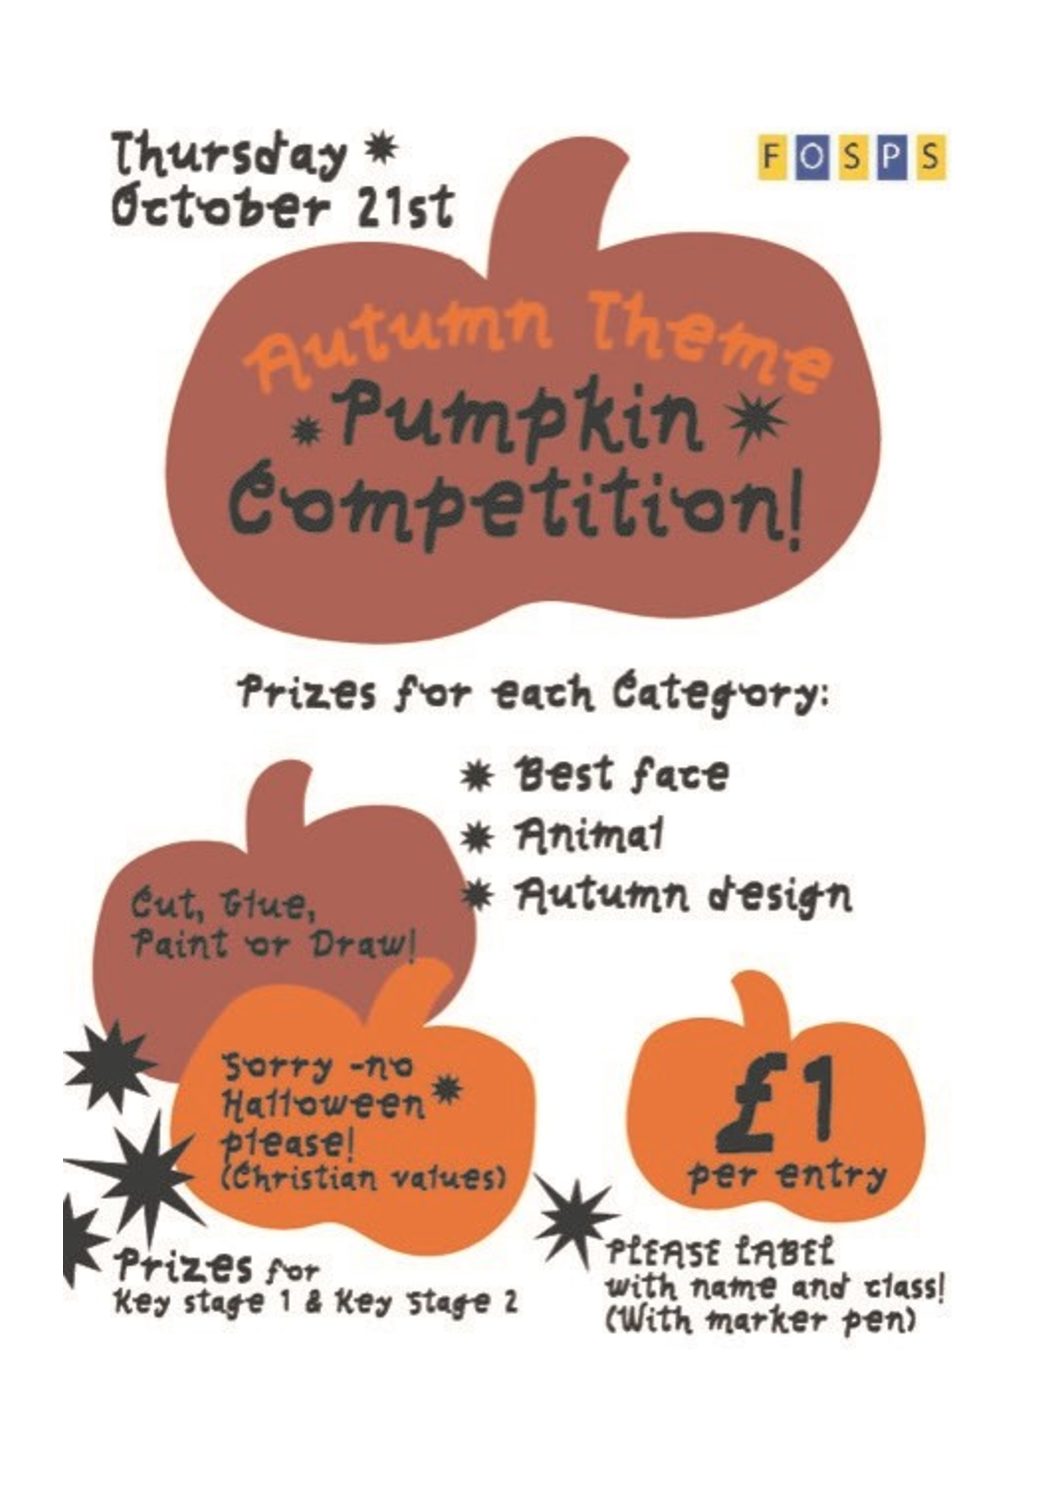 Autumn Theme Pumpkin Competition – Thursday 21st October 2021